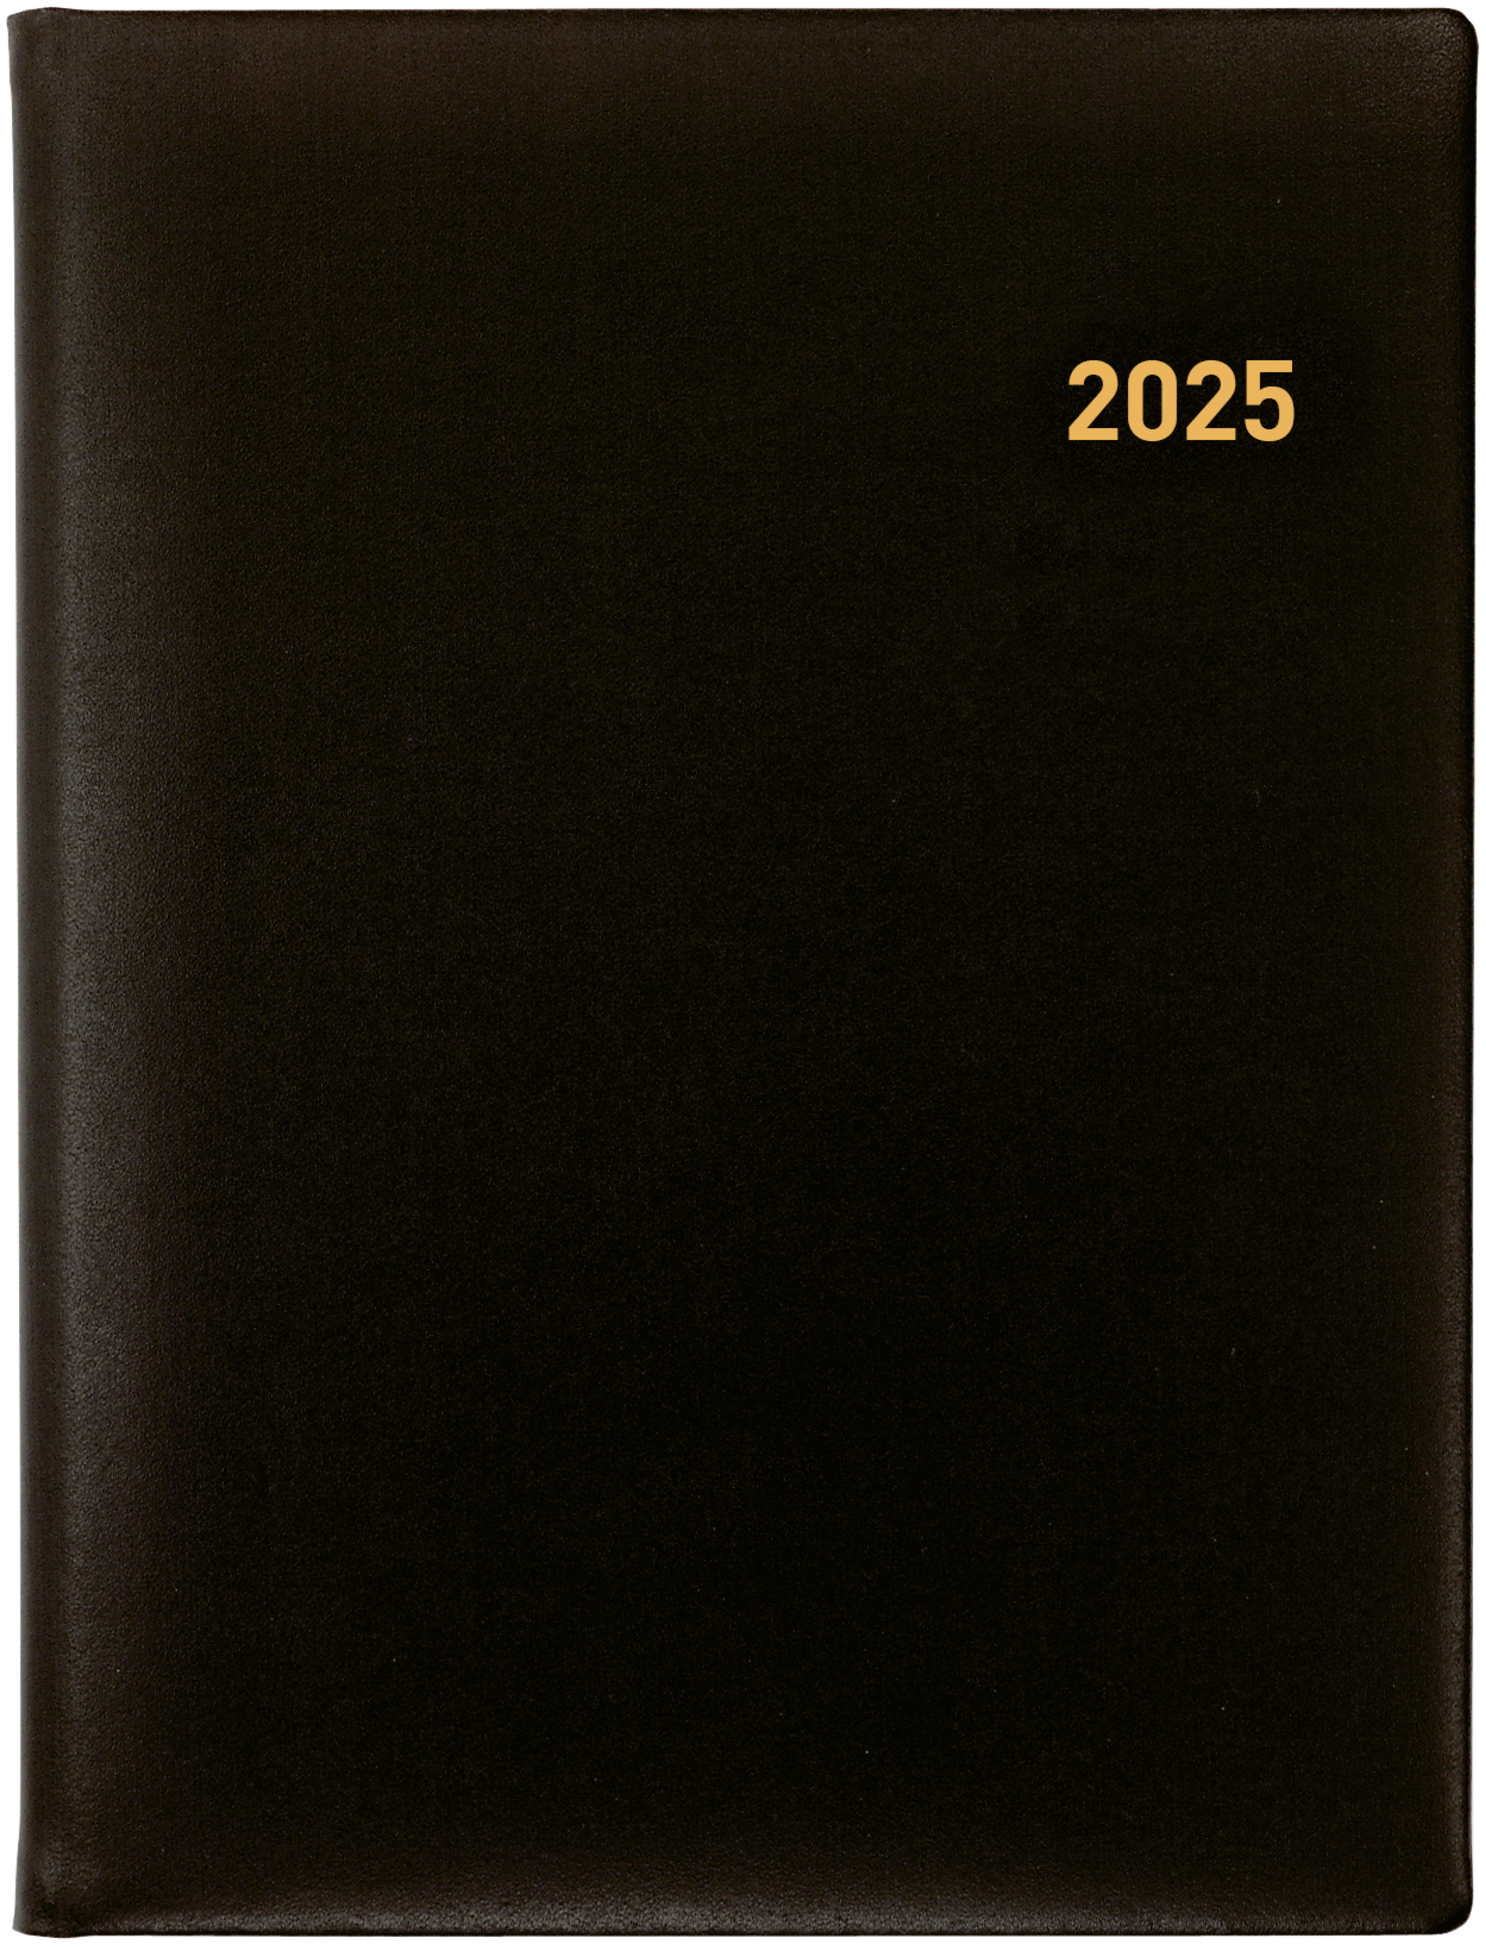 BIELLA Agenda Orario Leder 2025 809311020025 1S/2P noir ML 17.8x23.5cm